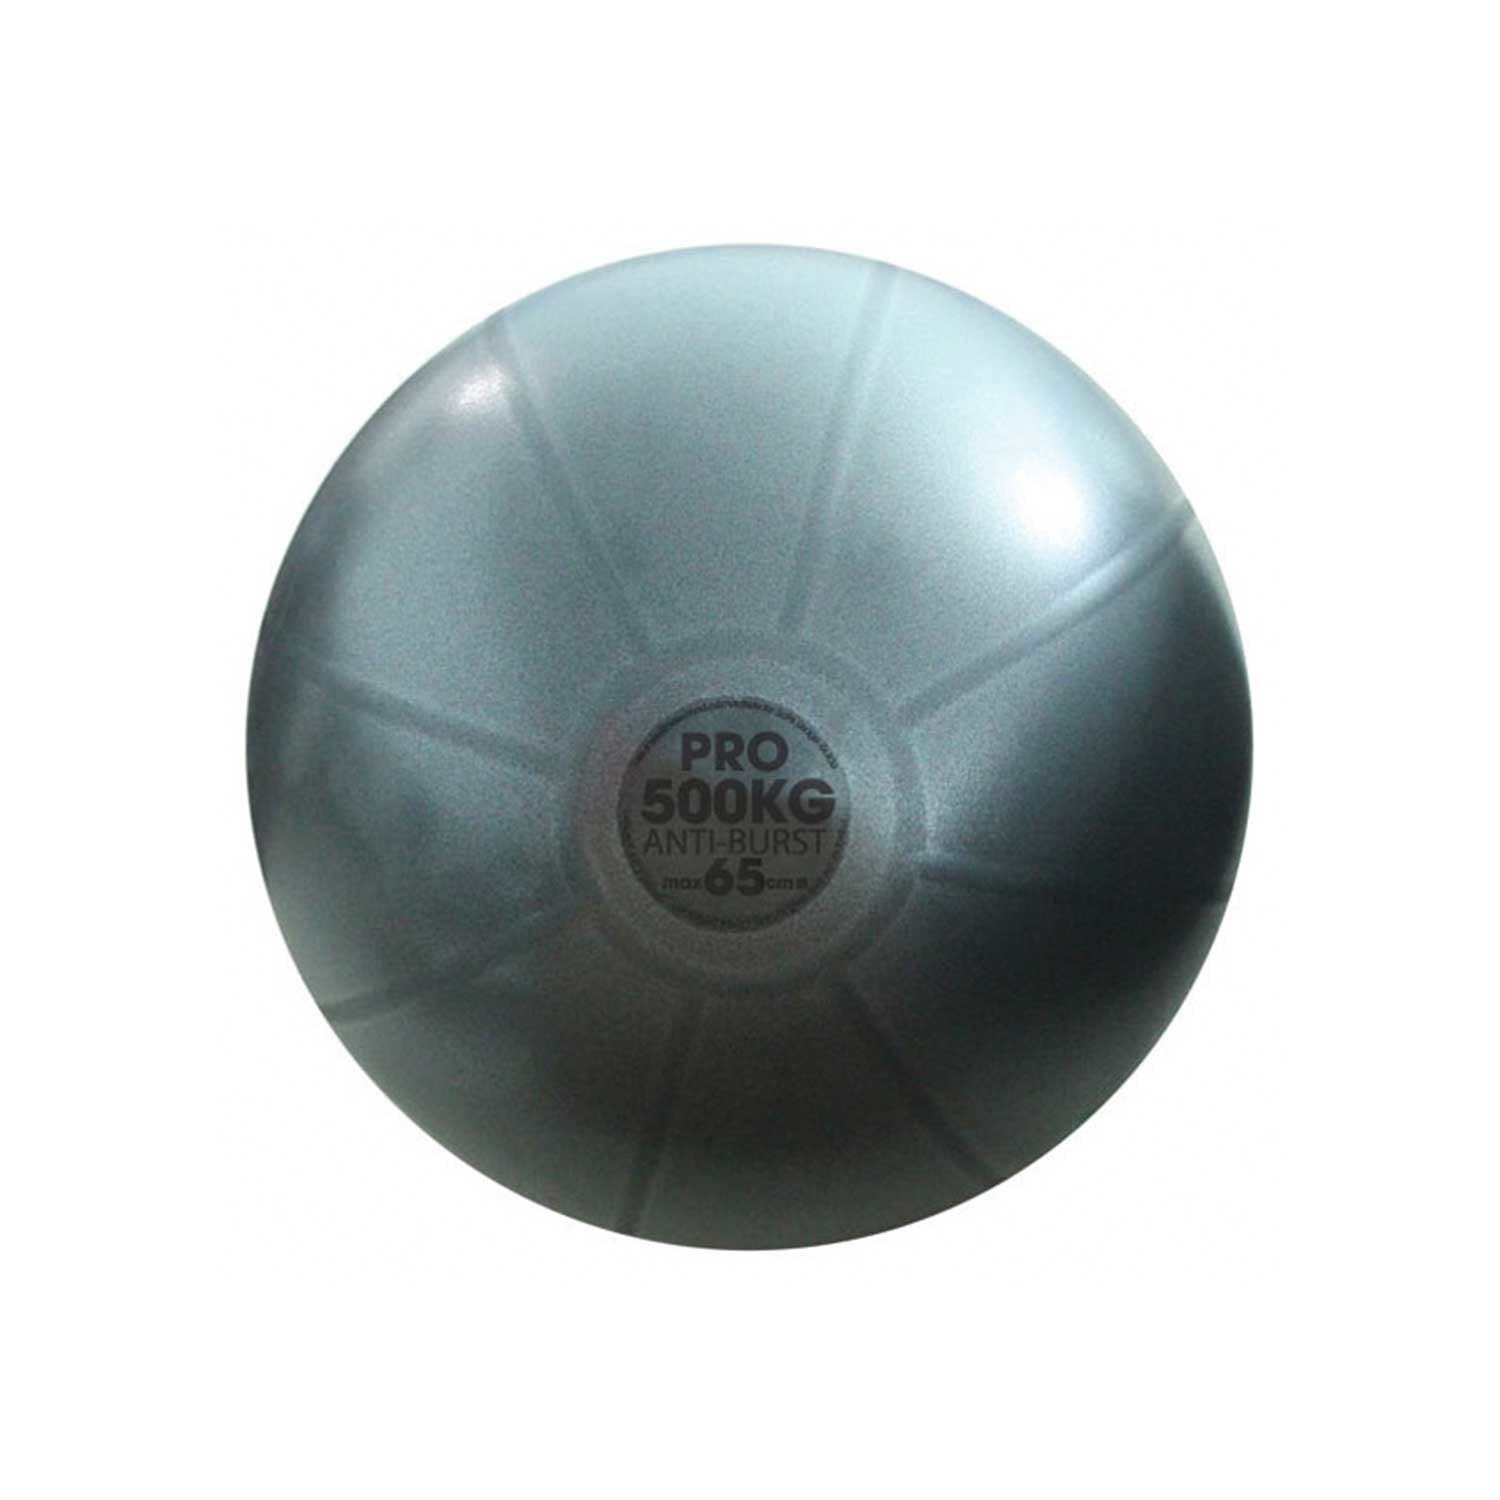 Studio Pro 500kg Swiss Ball